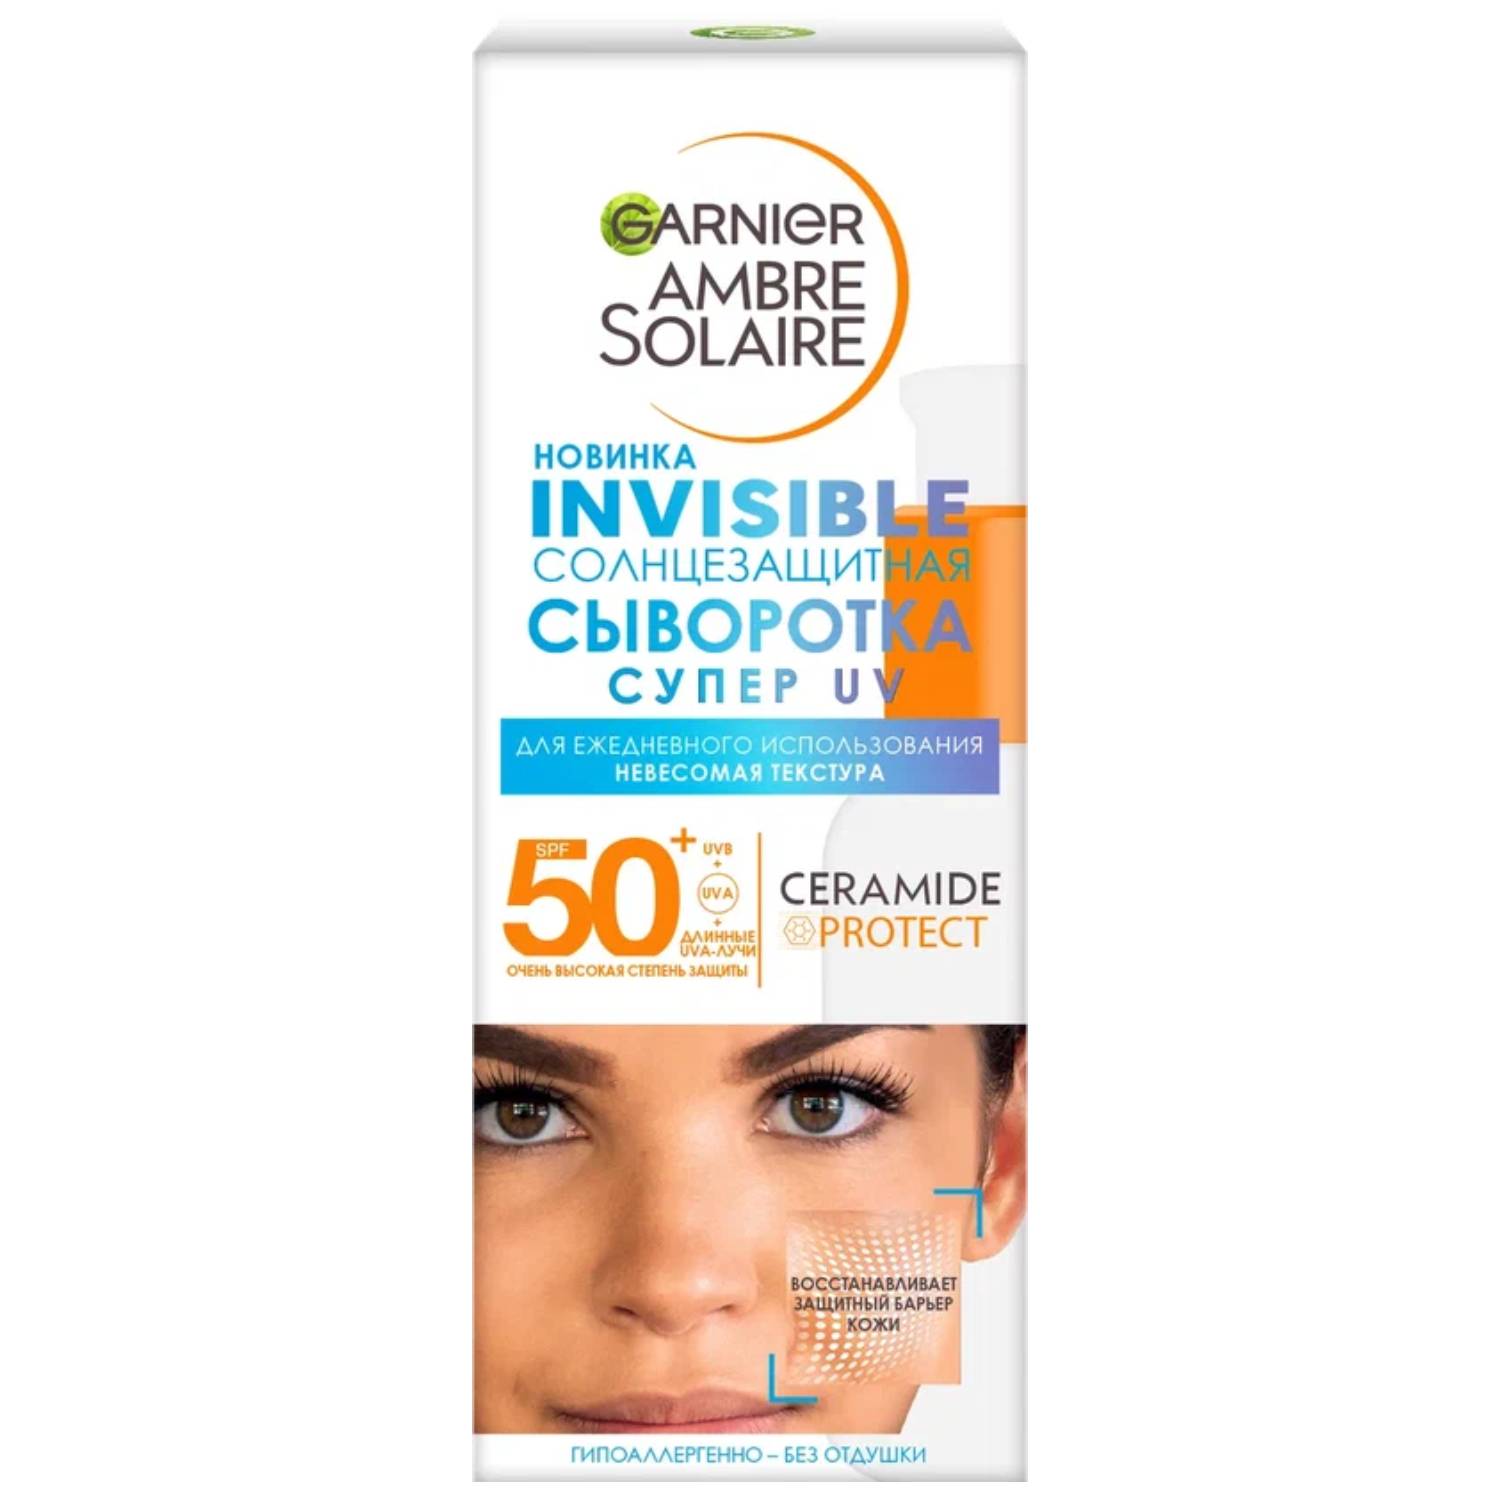 Garnier Солнцезащитная сыворотка для лица Супер UV Невидимая защита SPF50+, 30 мл (Garnier, Amber solaire)